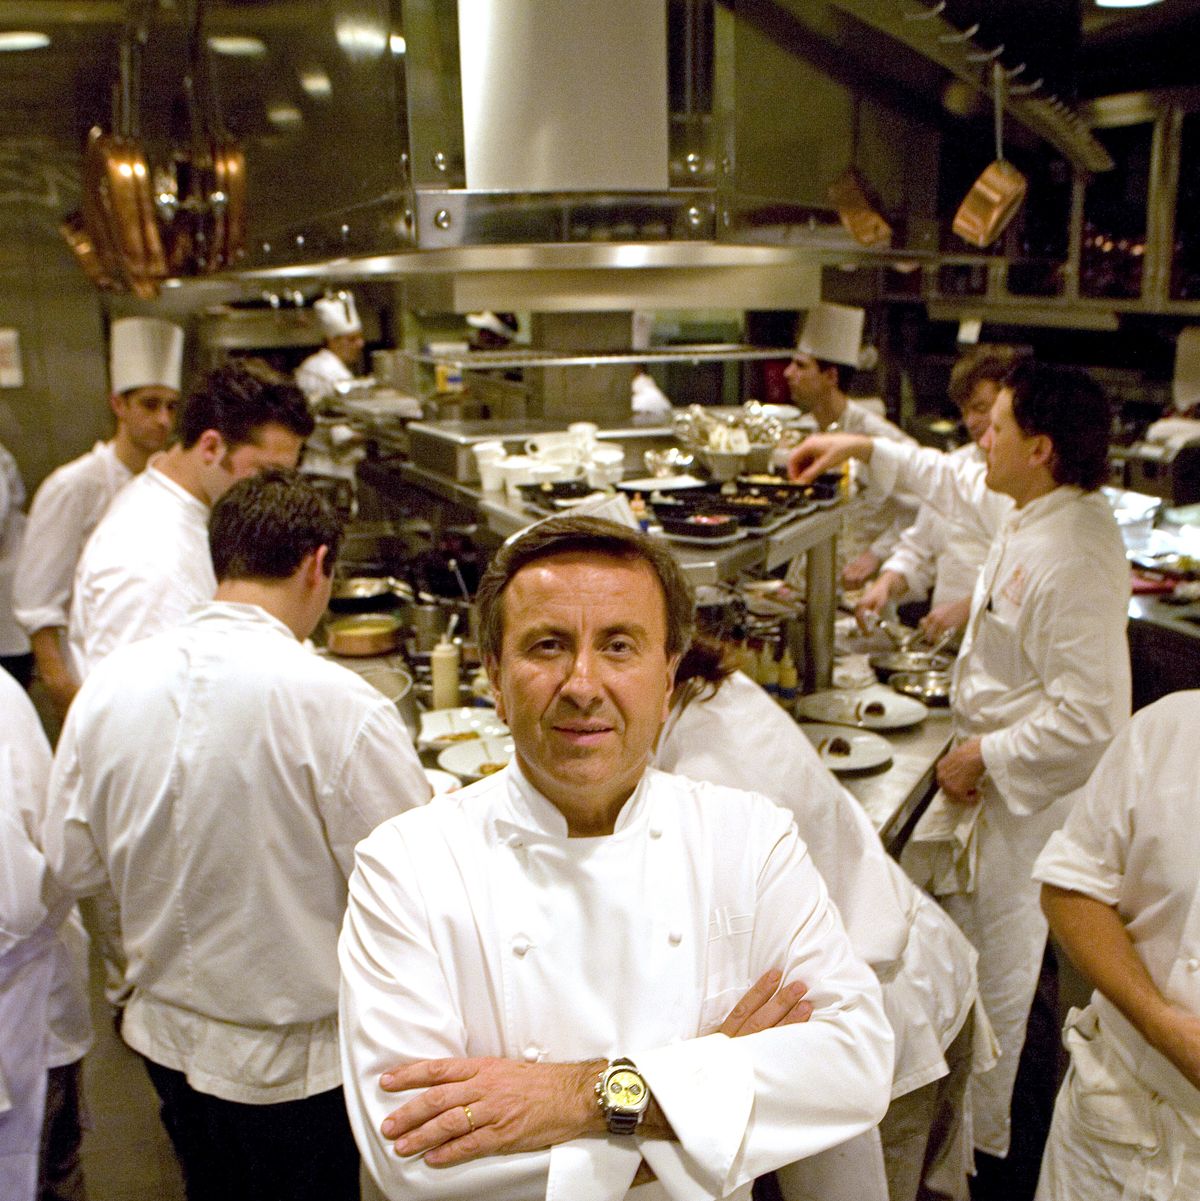 Daniel Boulud, Chef and Restaurateur